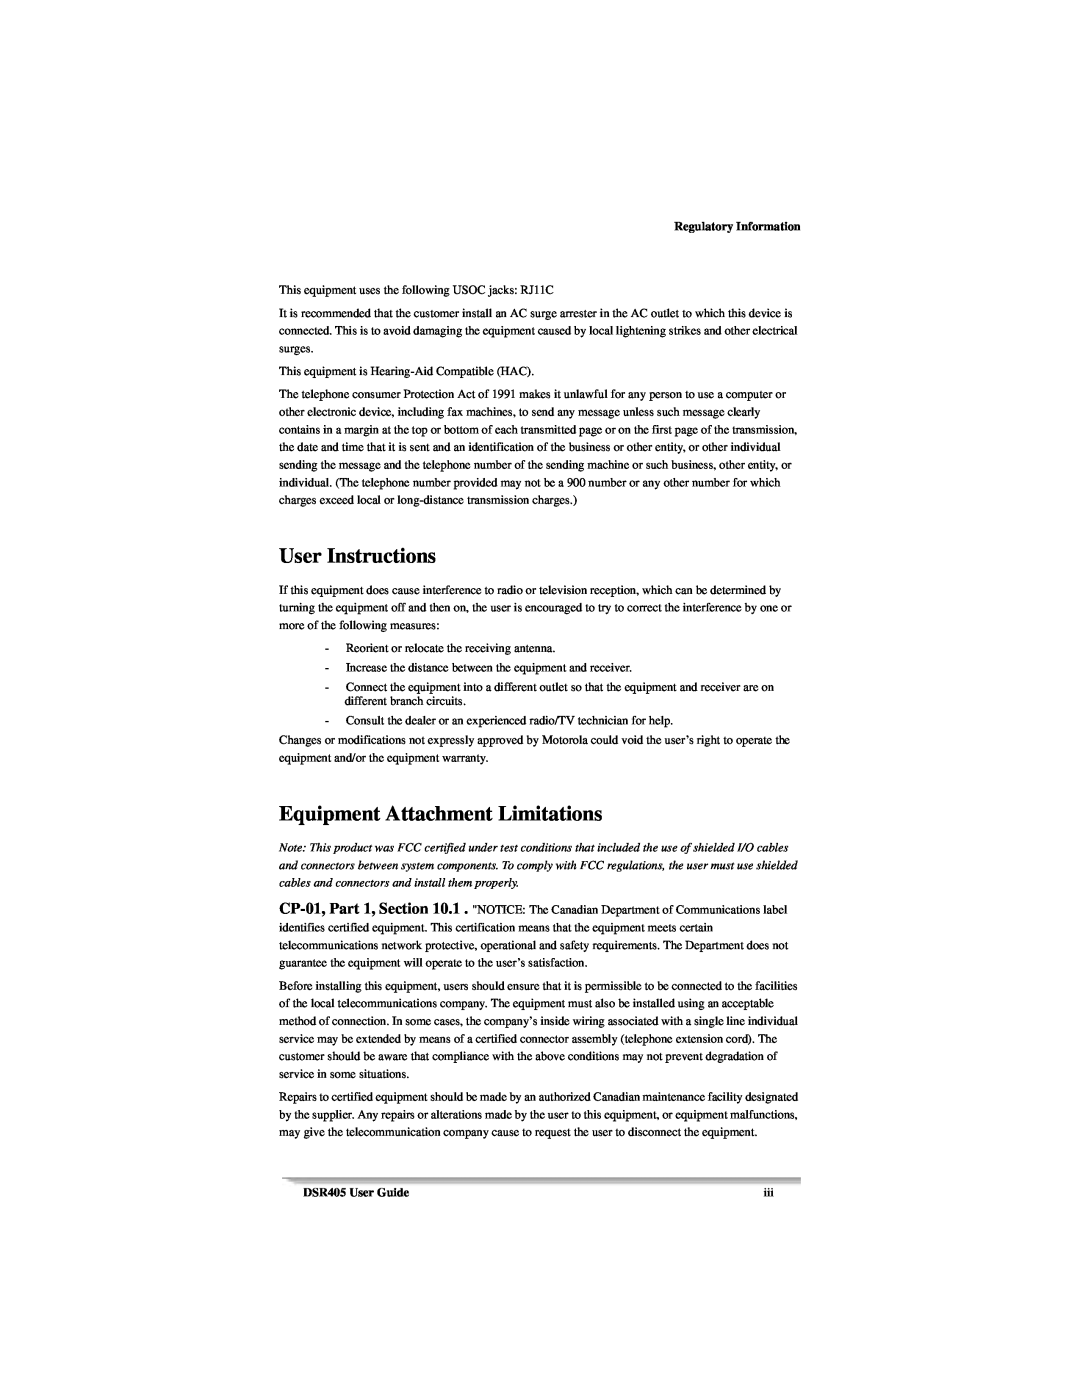 Motorola manual User Instructions, Equipment Attachment Limitations, Regulatory Information, DSR405 User Guide 